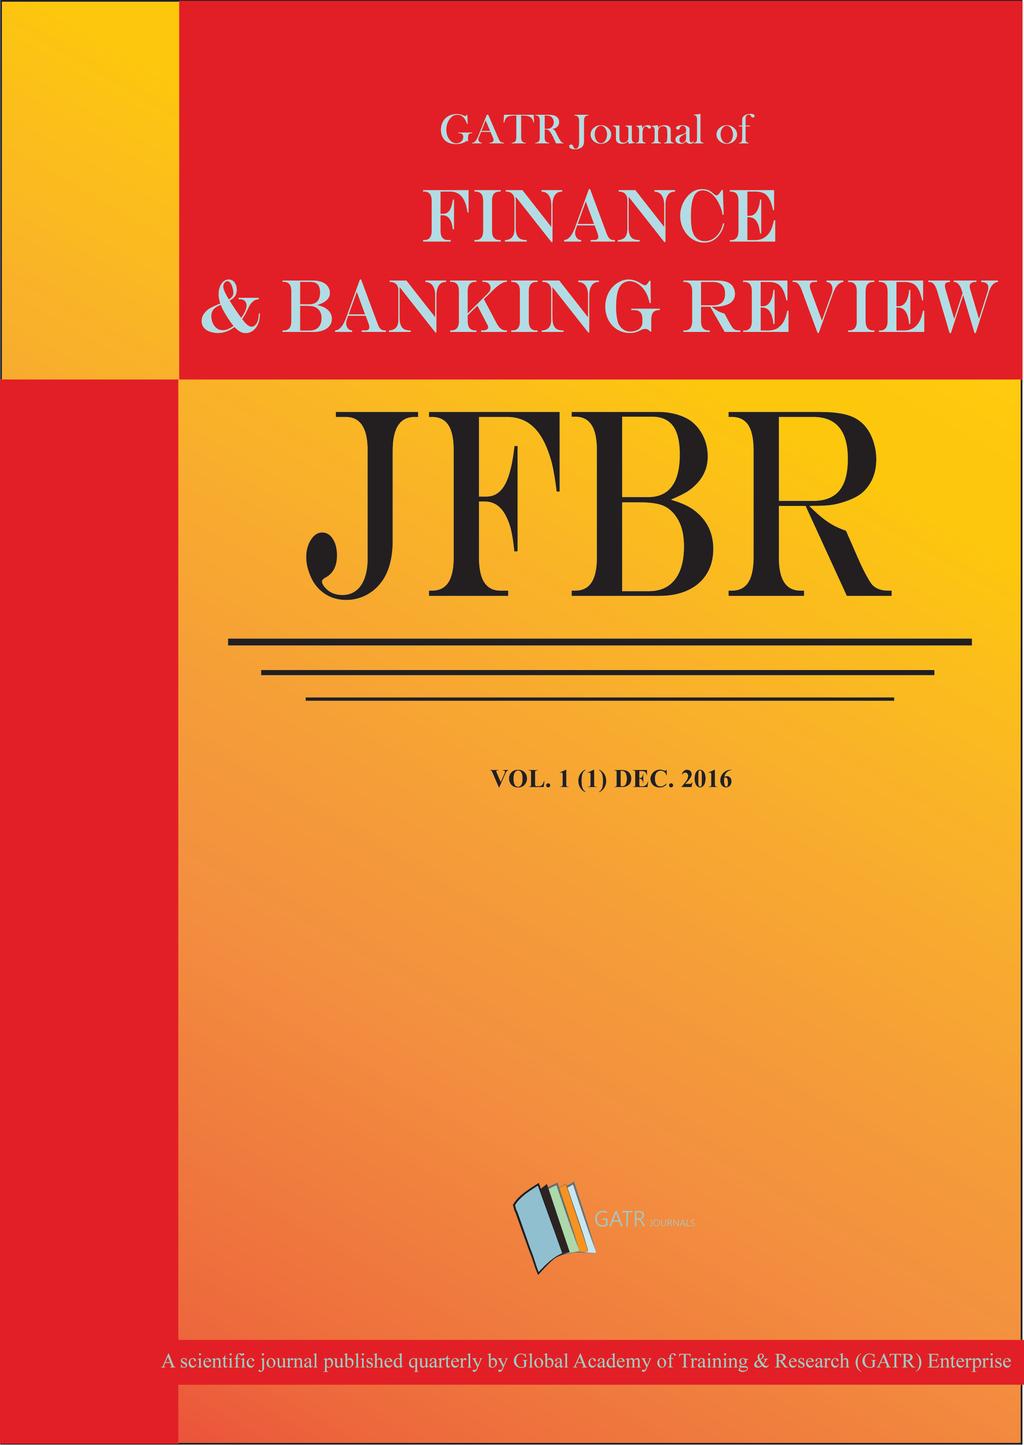 Journal of Finance and Banking Review GATR JOURNALS Journal homepage: www.gatrenterprise.com/gatrjournals/index.